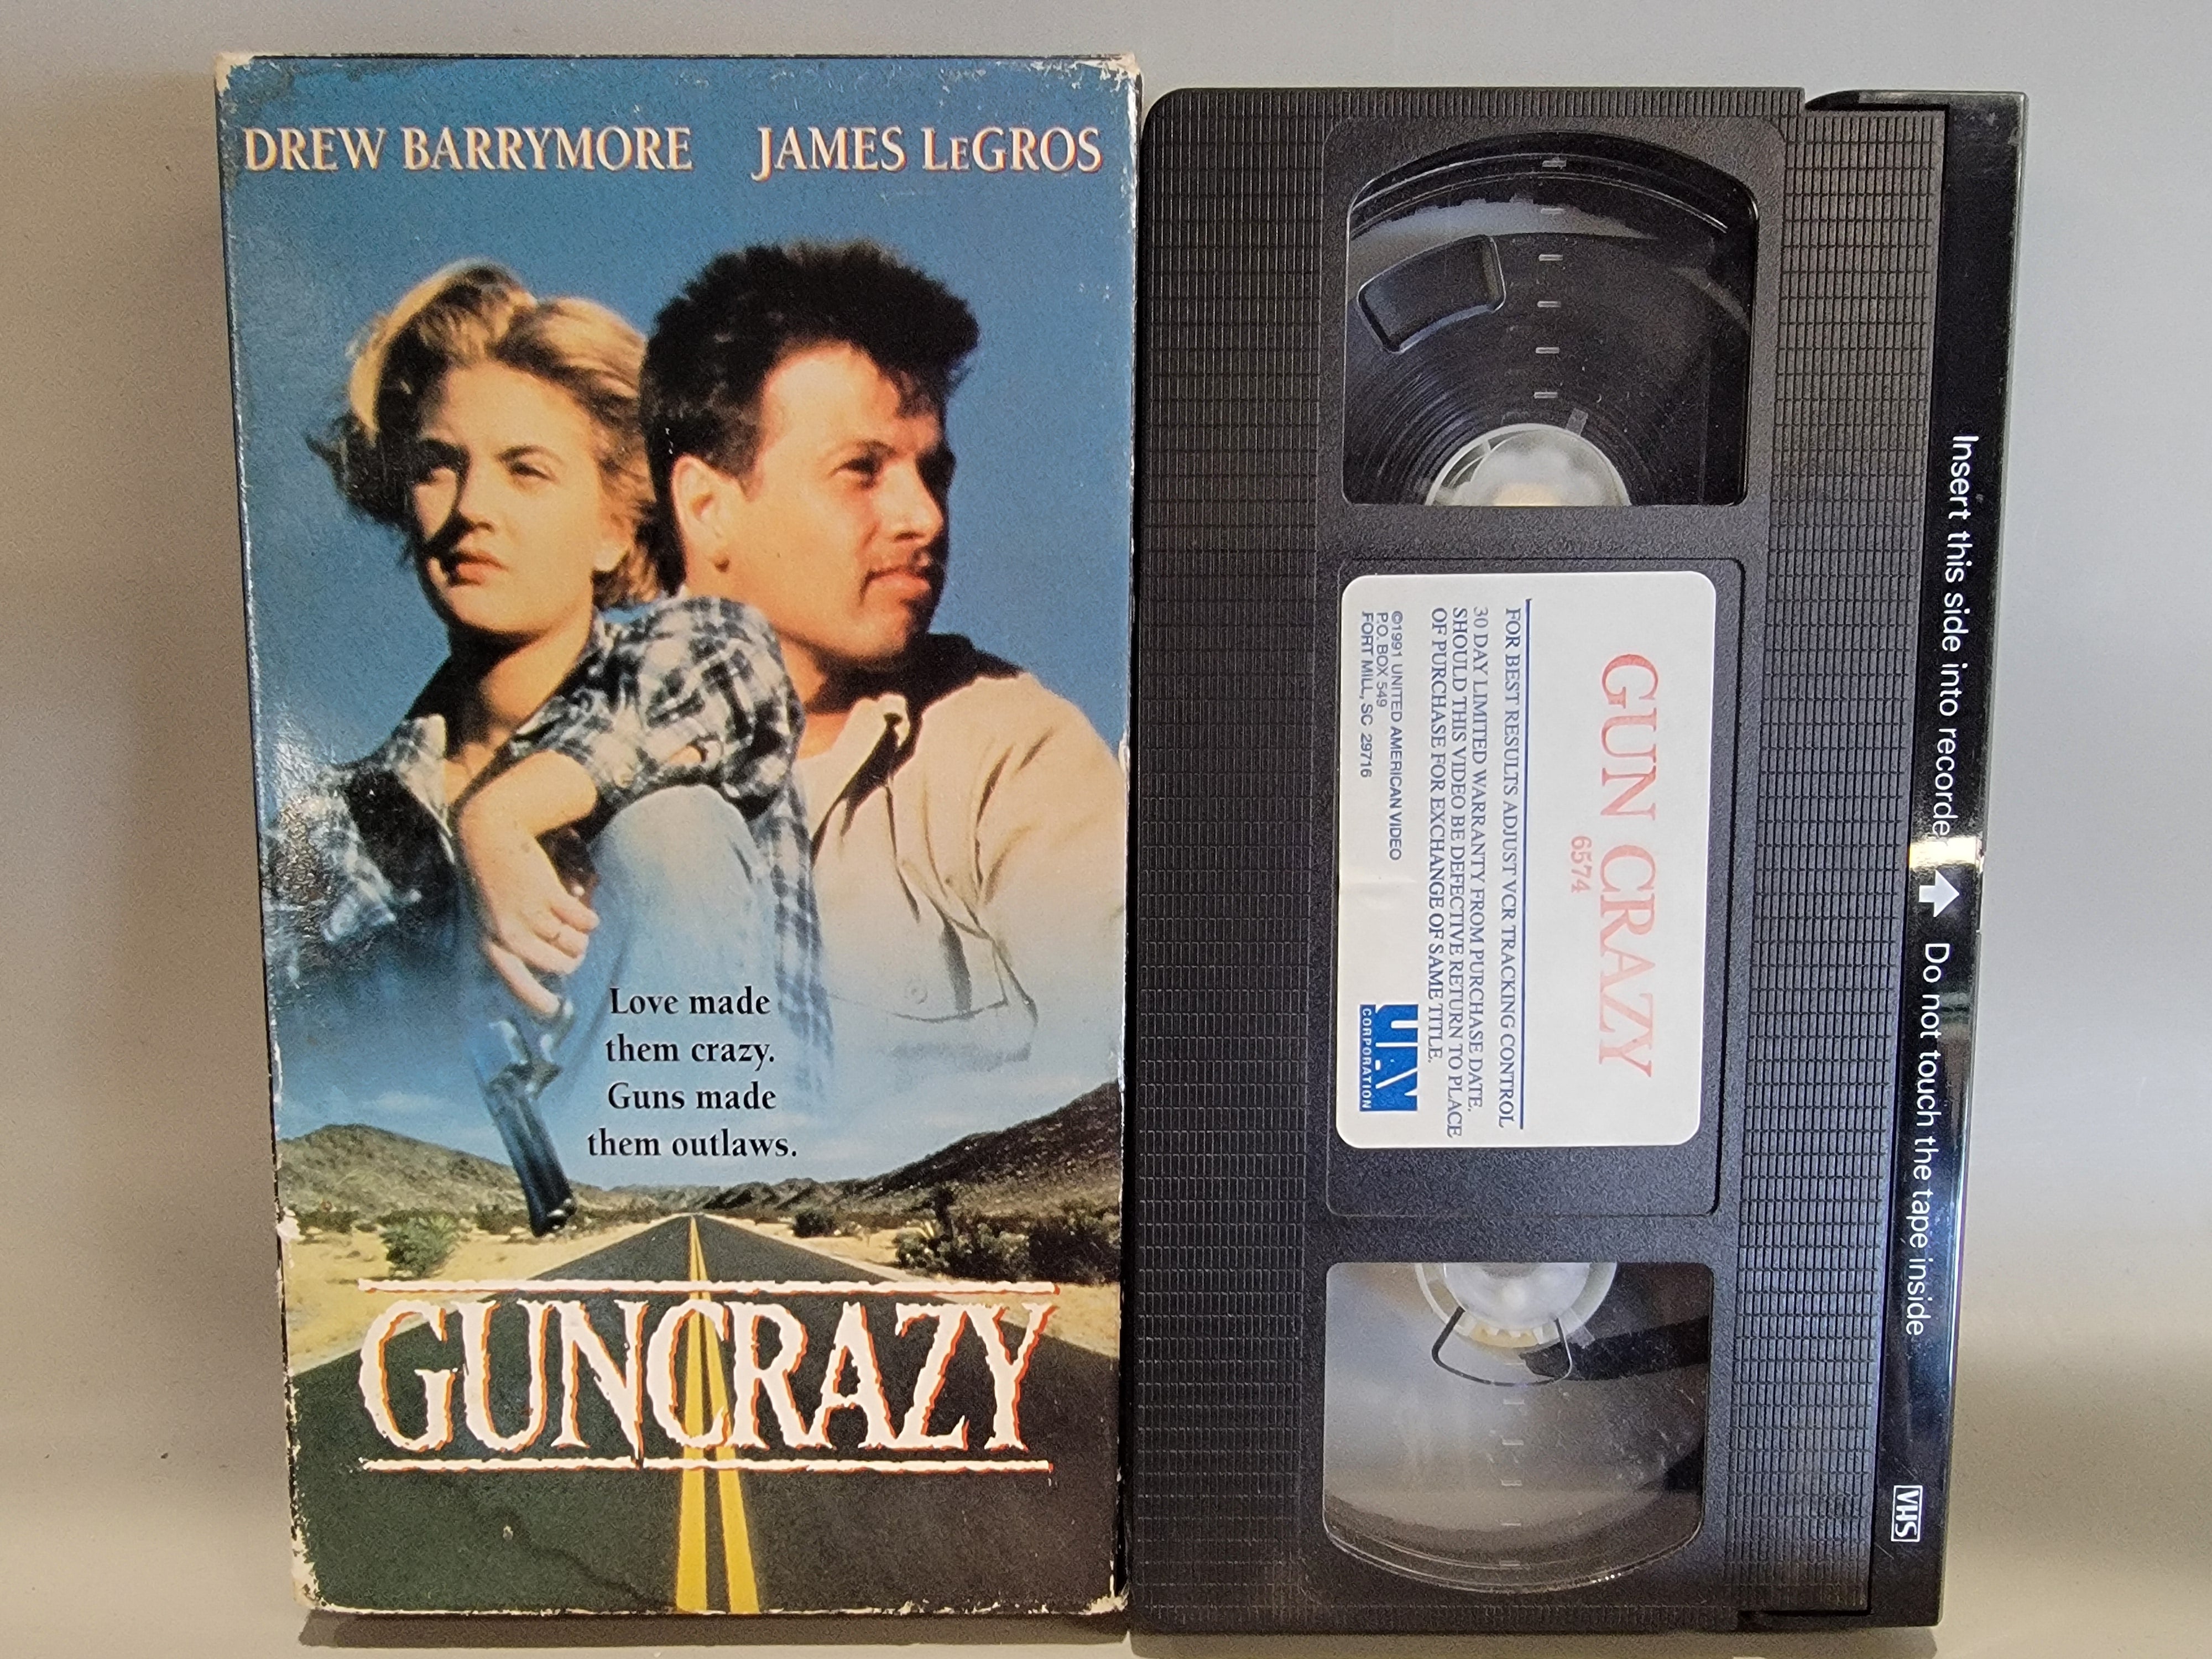 GUNCRAZY VHS [USED]